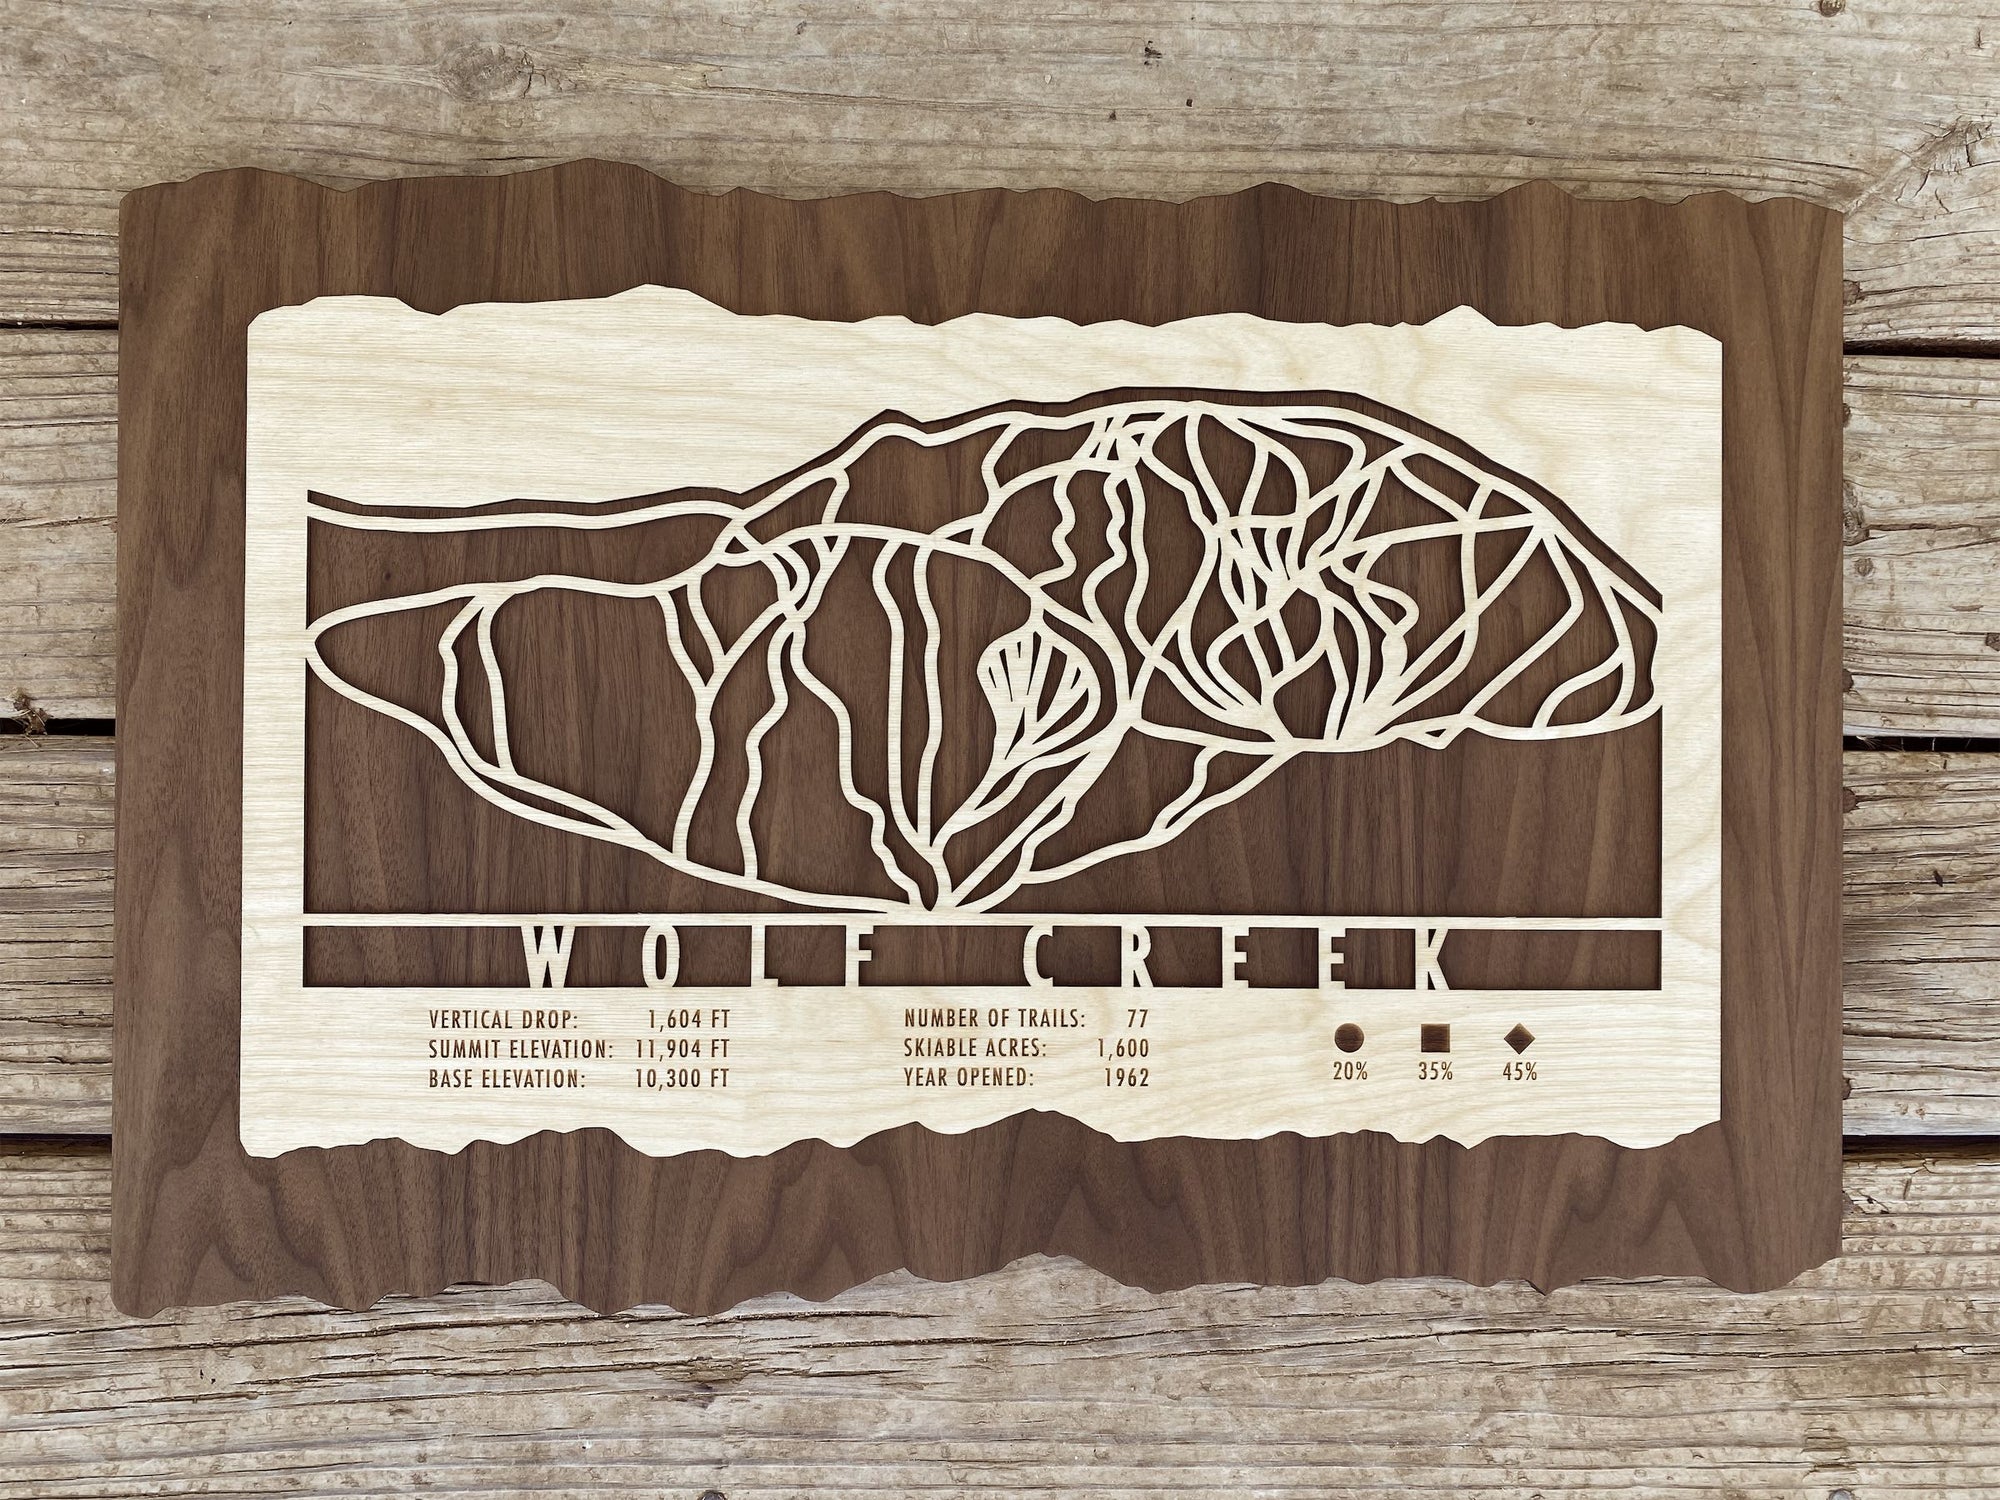 Wolf Creek Trail Map